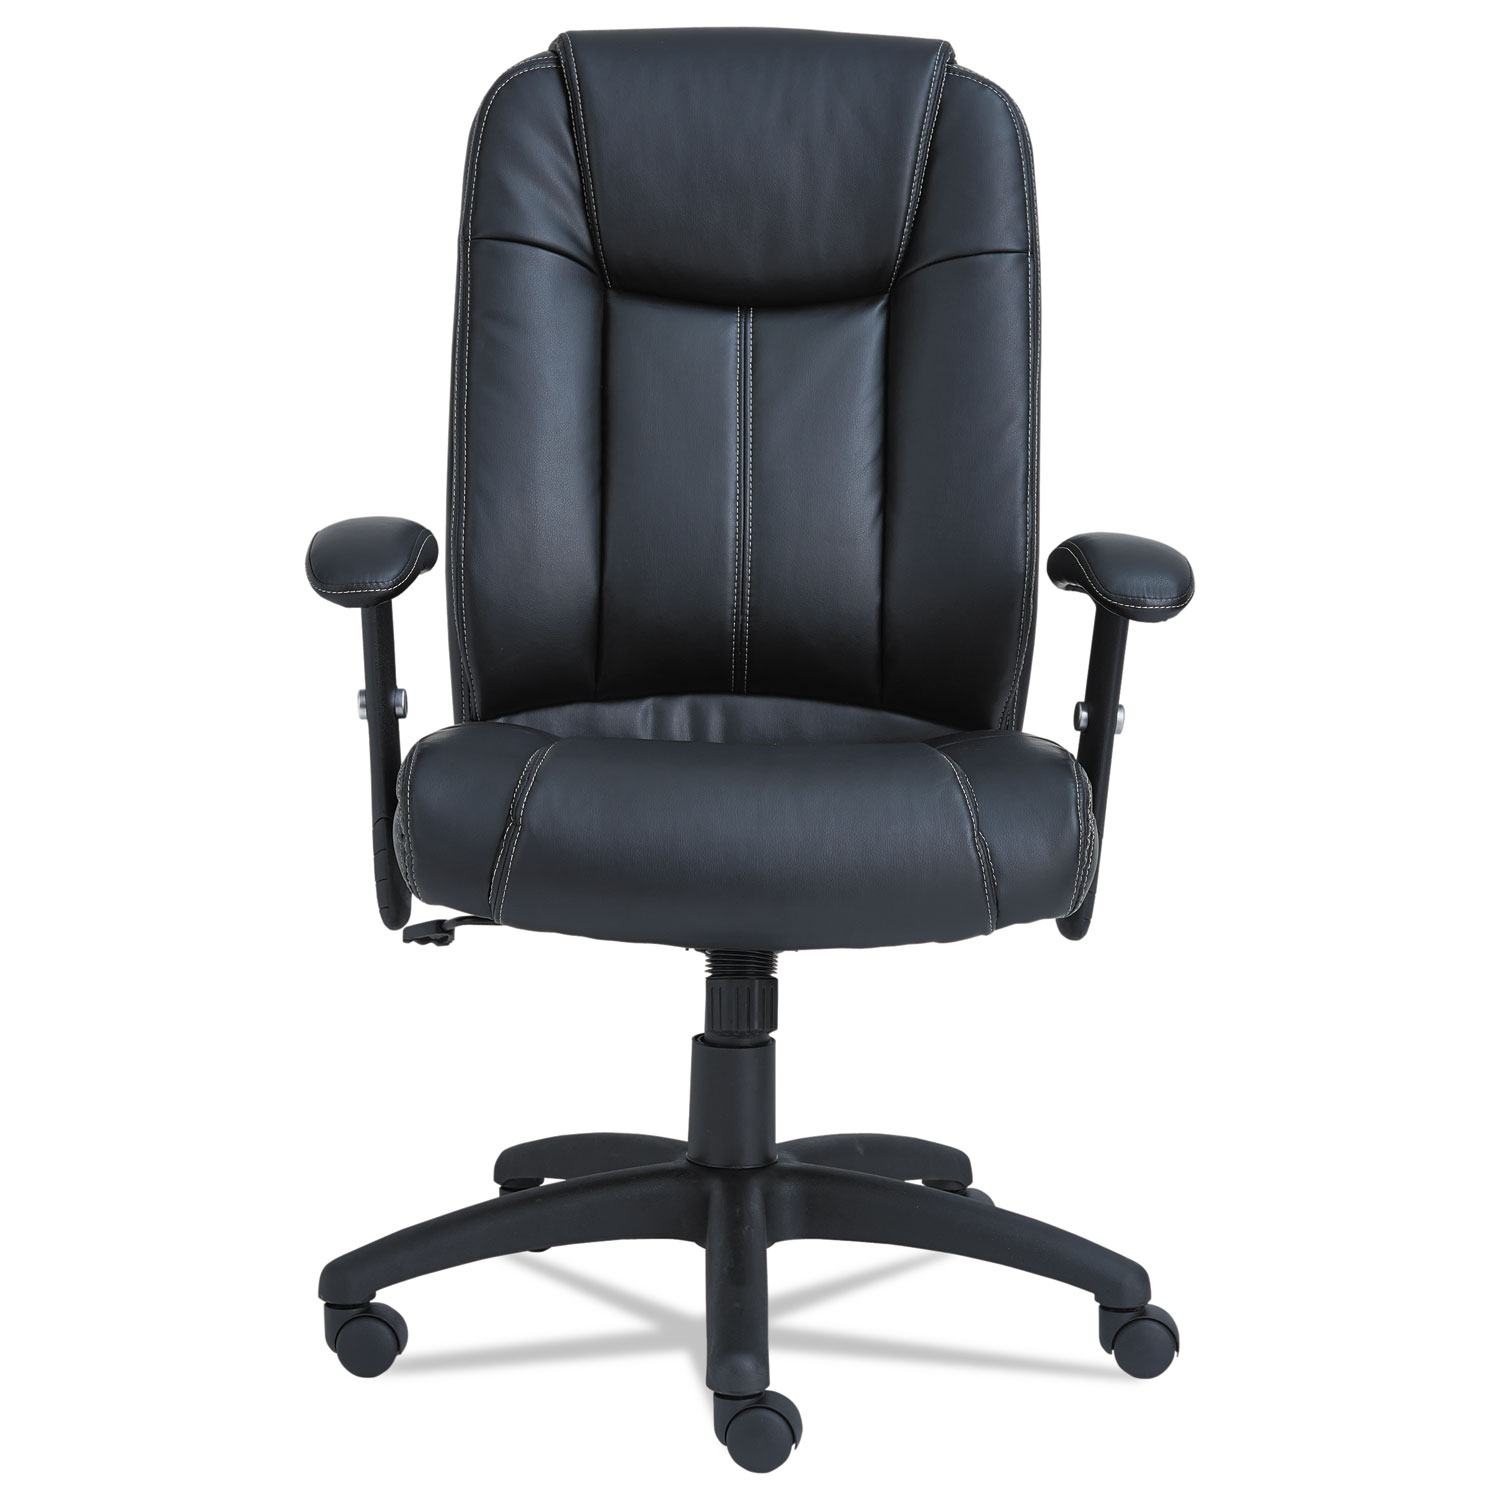 Alera CC Series Executive High-Back Swivel/Tilt Leather Chair, Black